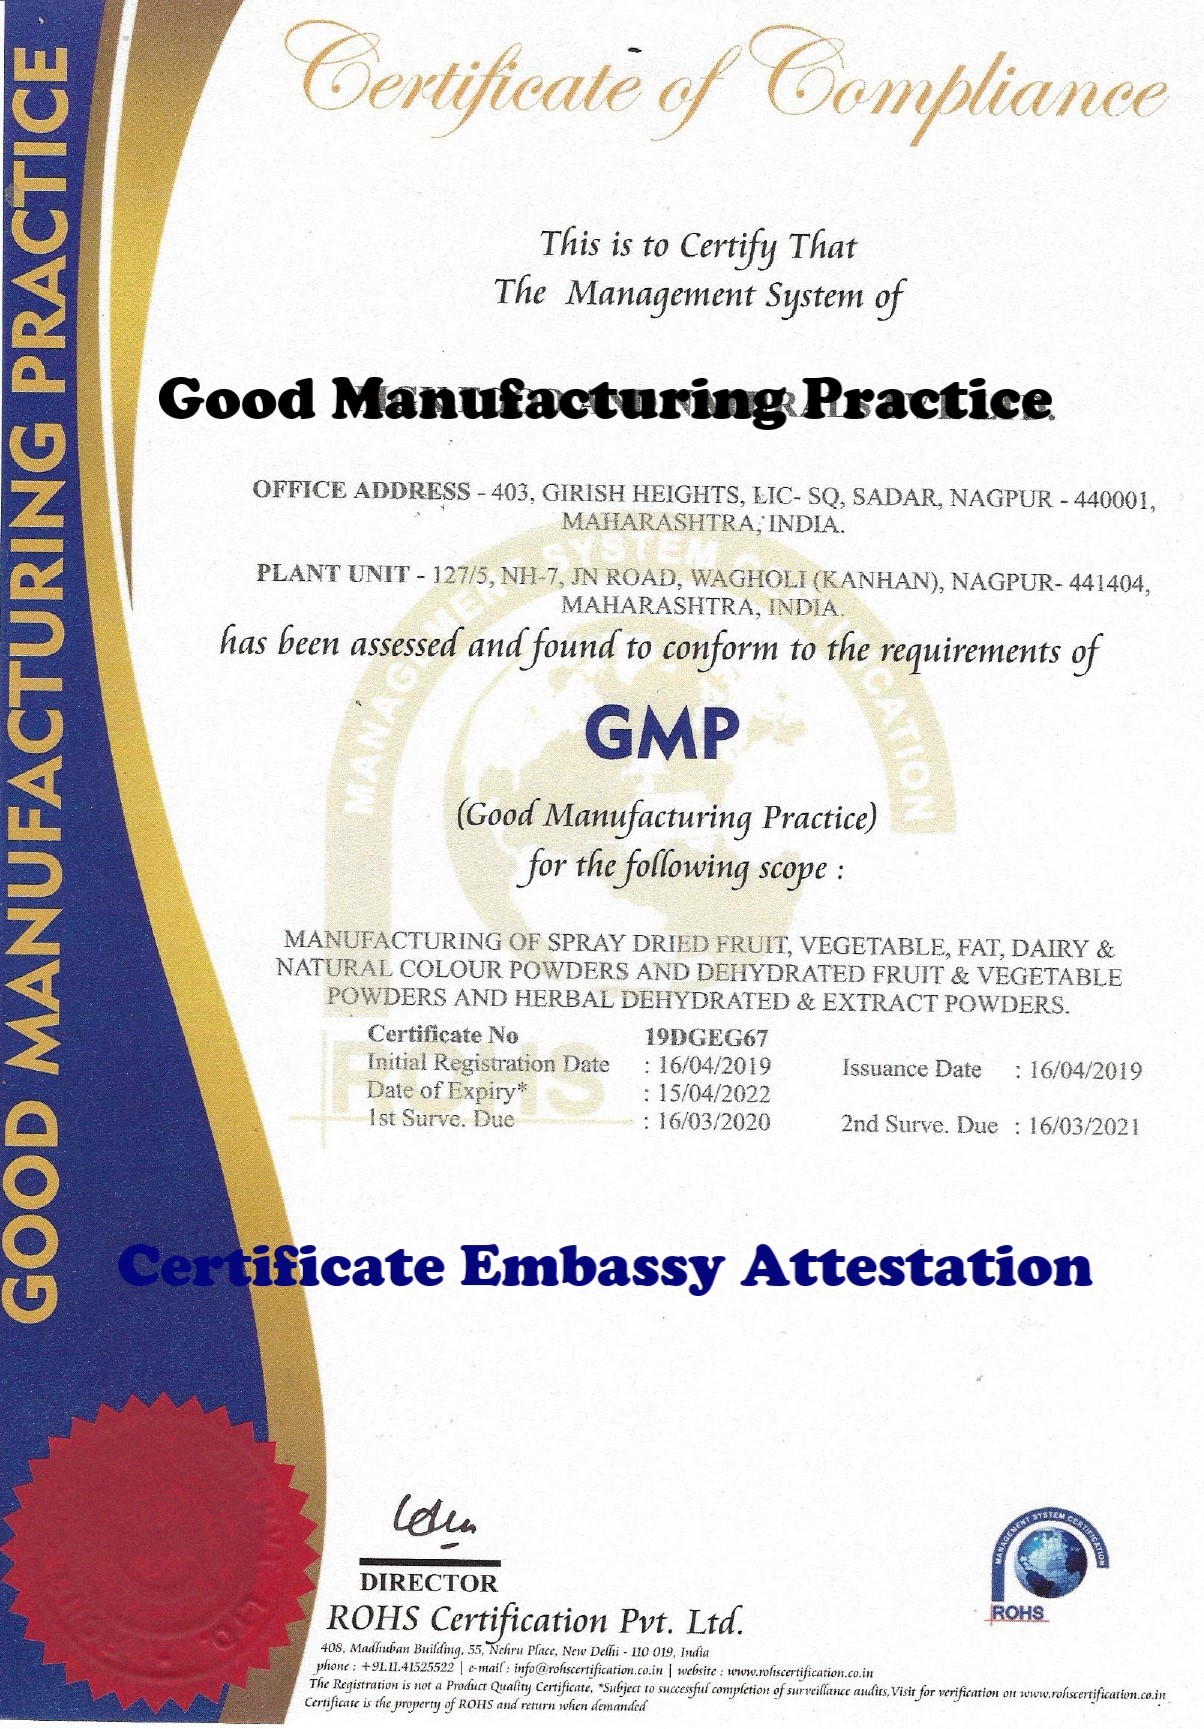 GMP Certificate Attestation from Estonia Embassy